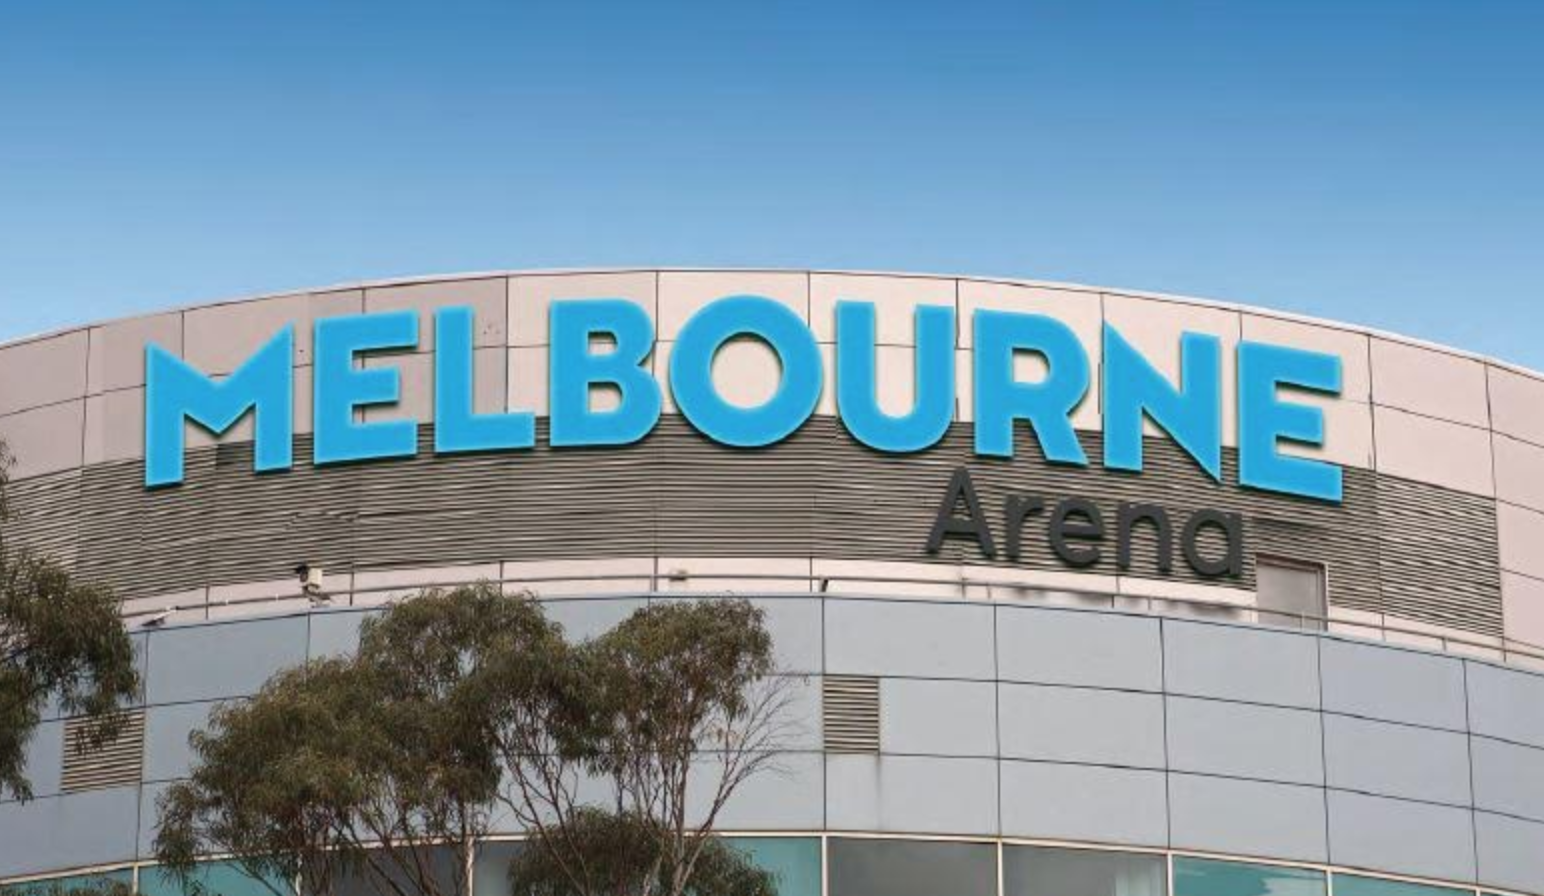 Hisense Arena renamed Melbourne Arena